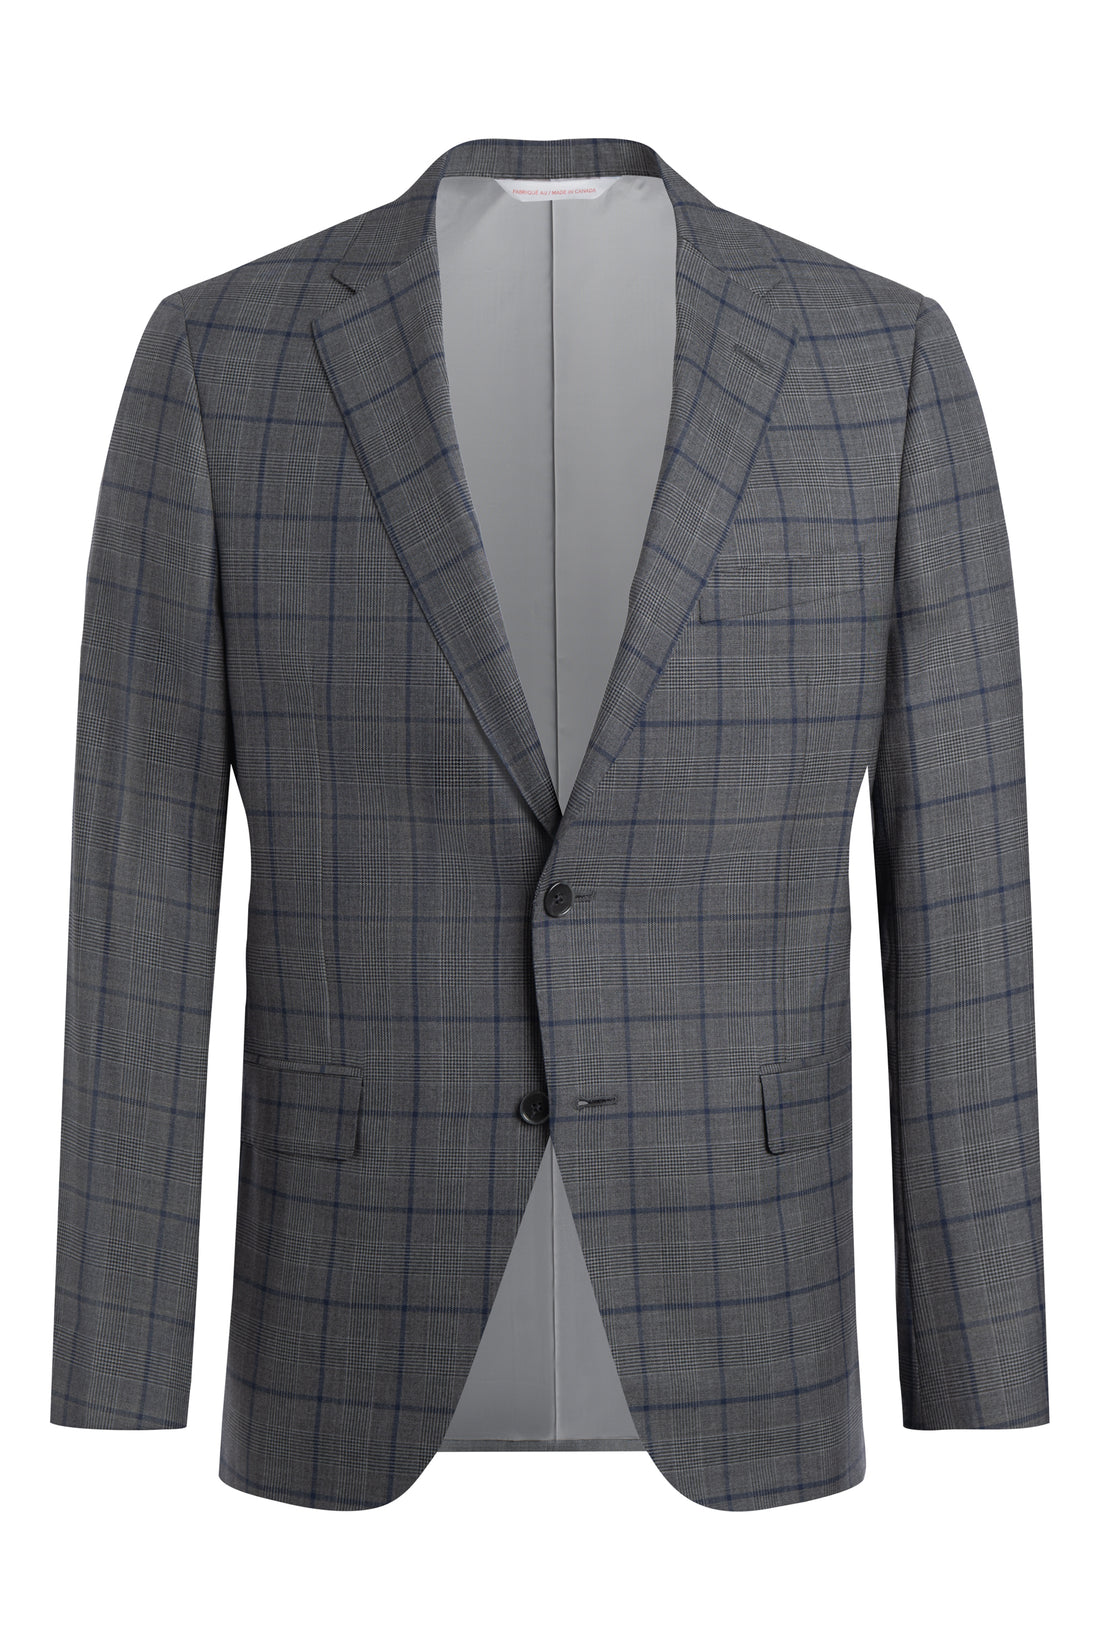 Smoke Grey 150’s Overcheck Suit